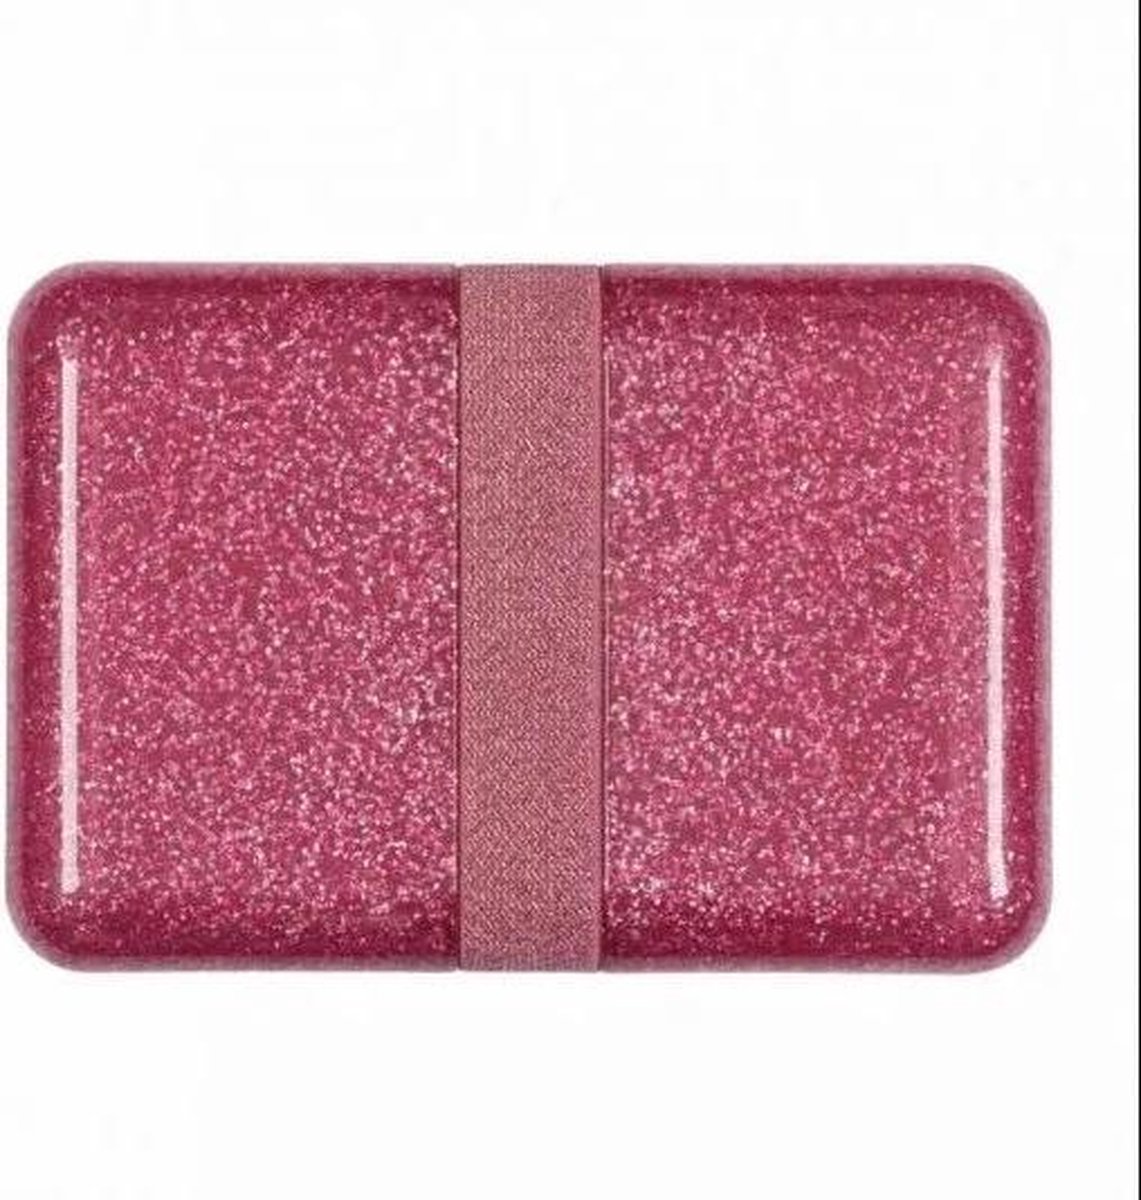 Lunch box: Glitter - roze | A Little Lovely Company - A Little Lovely Company